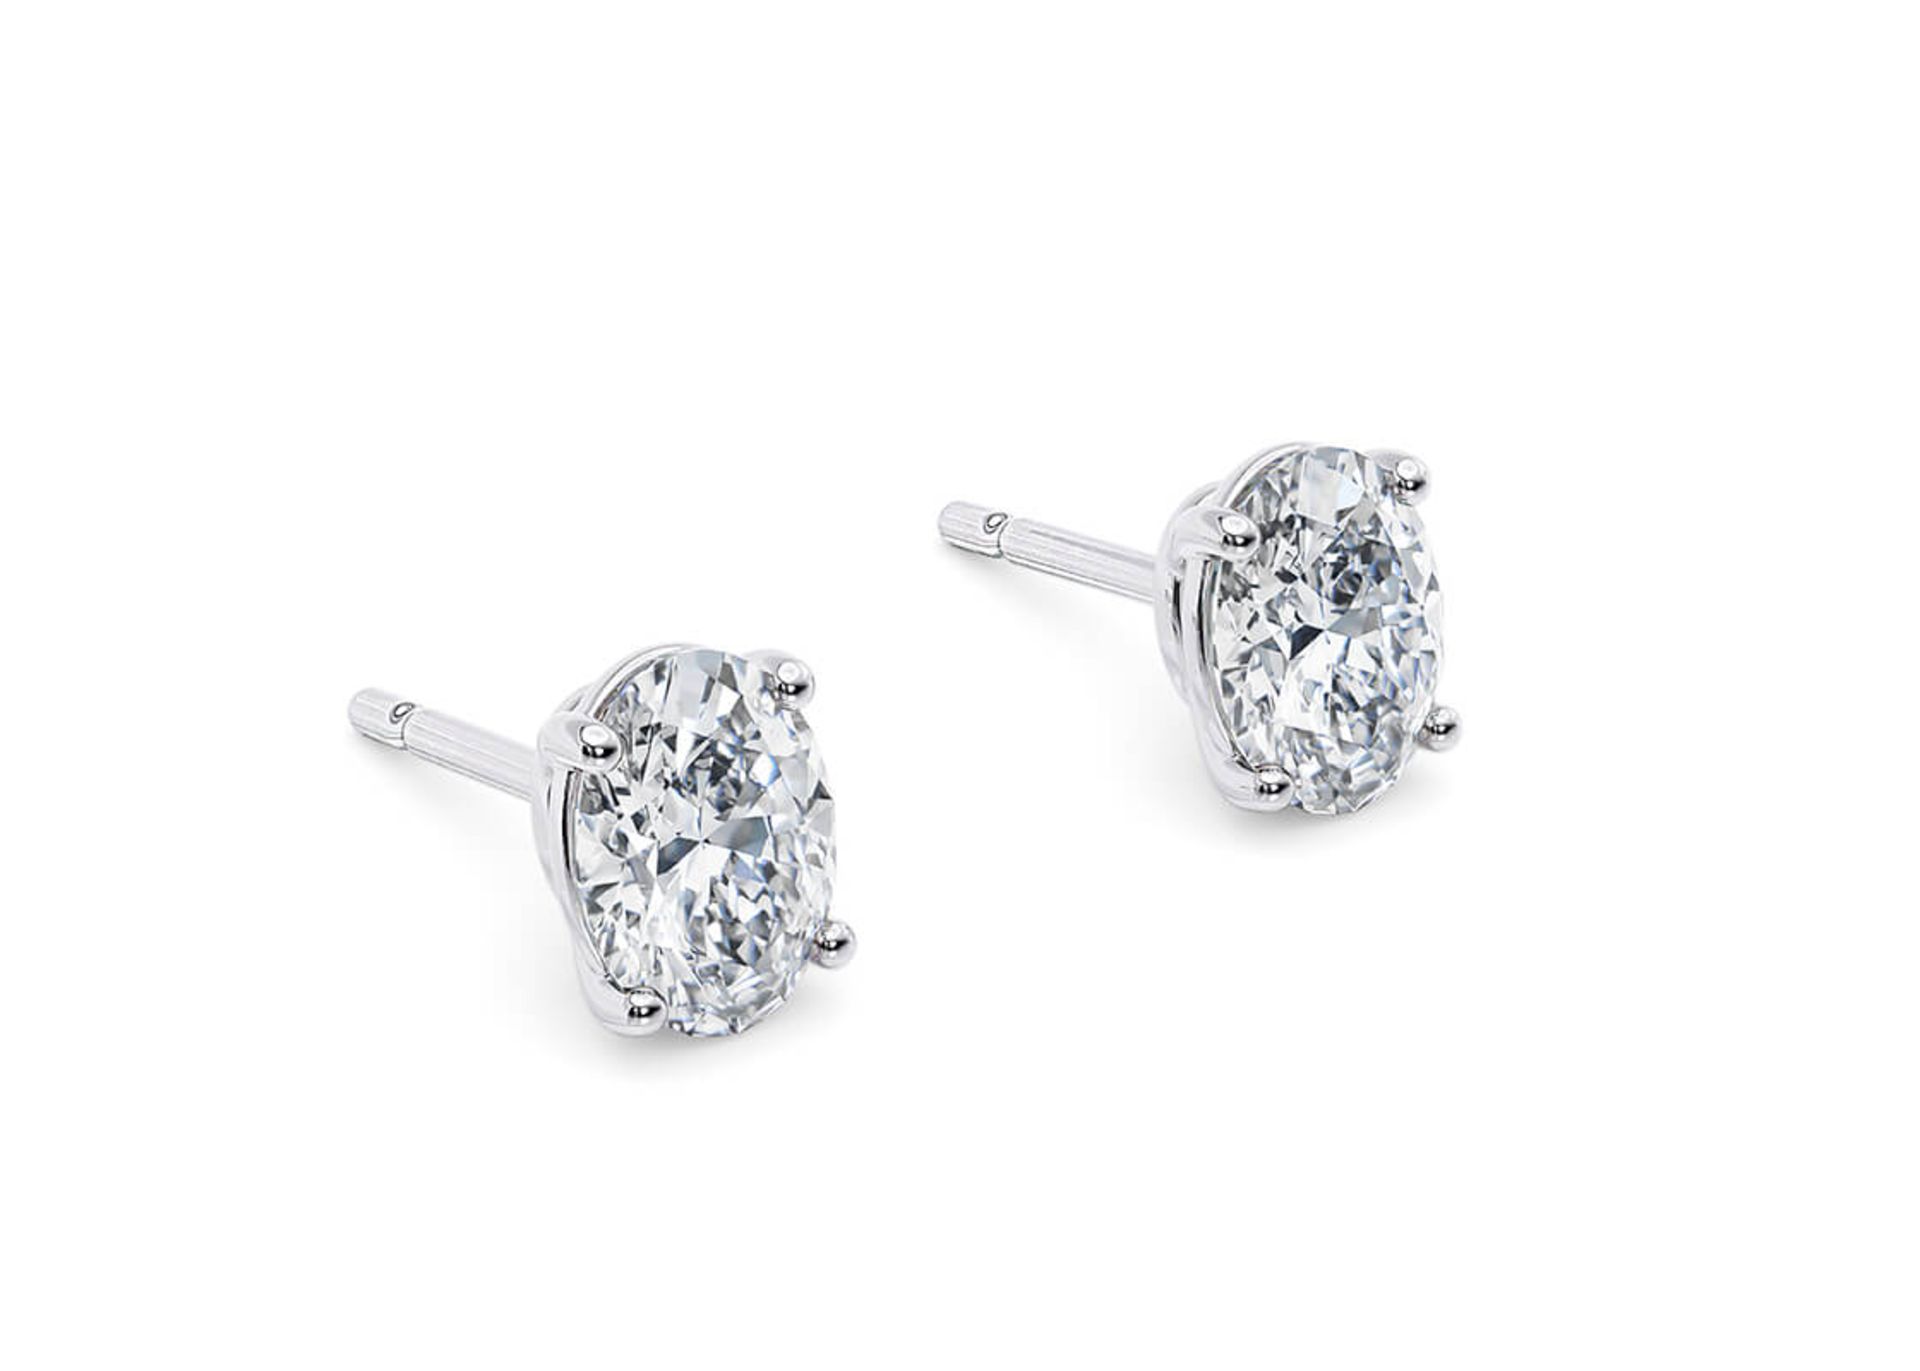 Oval Cut 5.00 Carat Diamond Earrings Set in 18kt White Gold - D Colour VS Clarity - IGI - Image 2 of 3